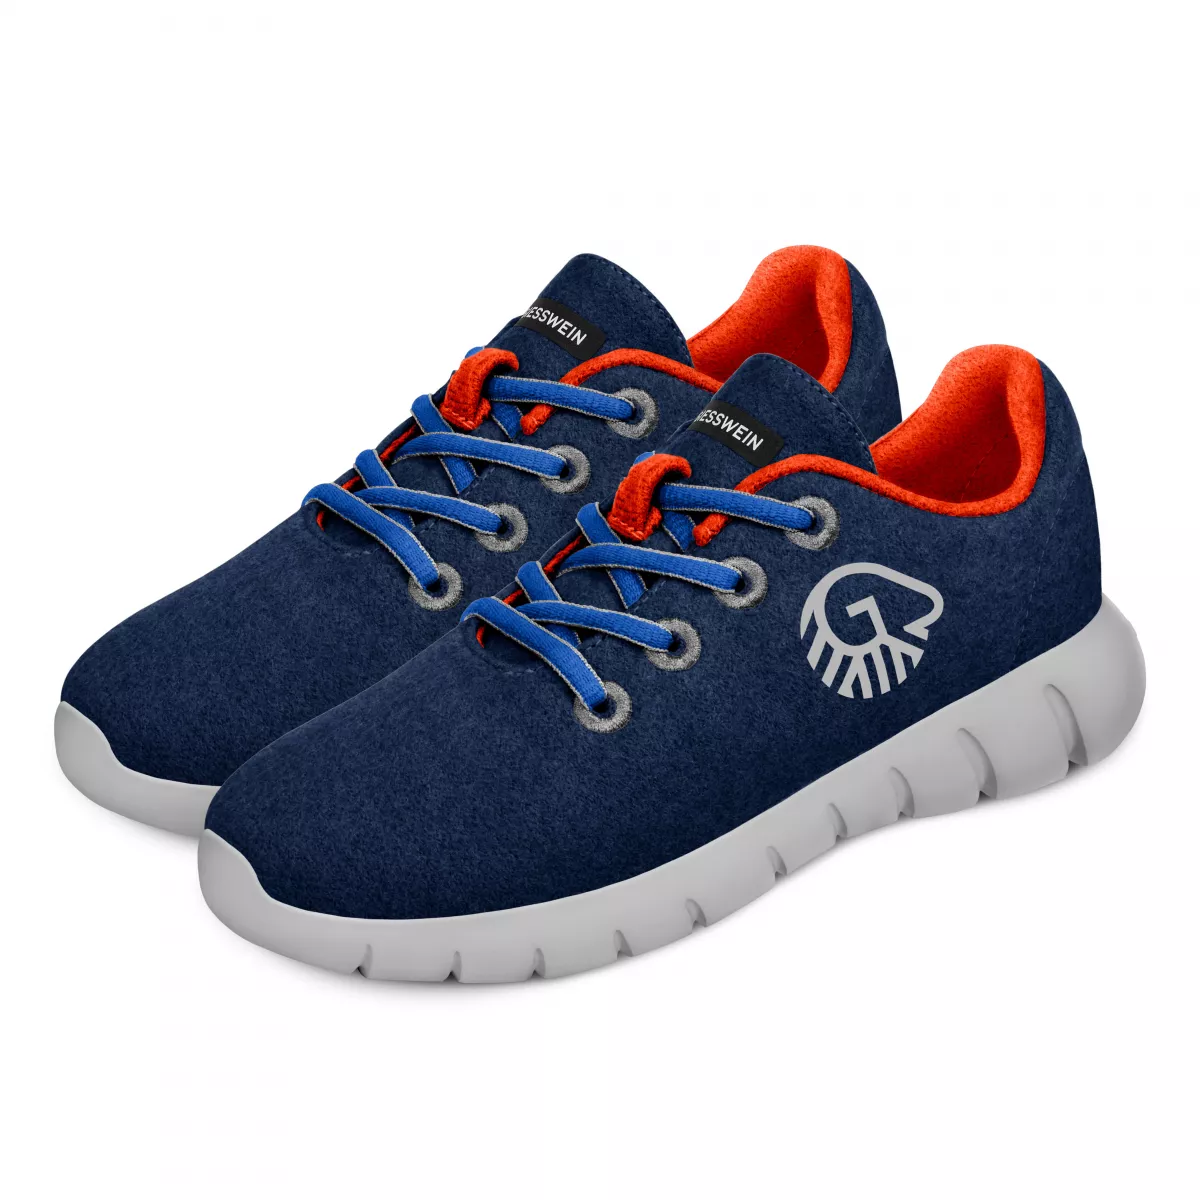 Pantofi barbati Merino Runners bleumarin 640 41